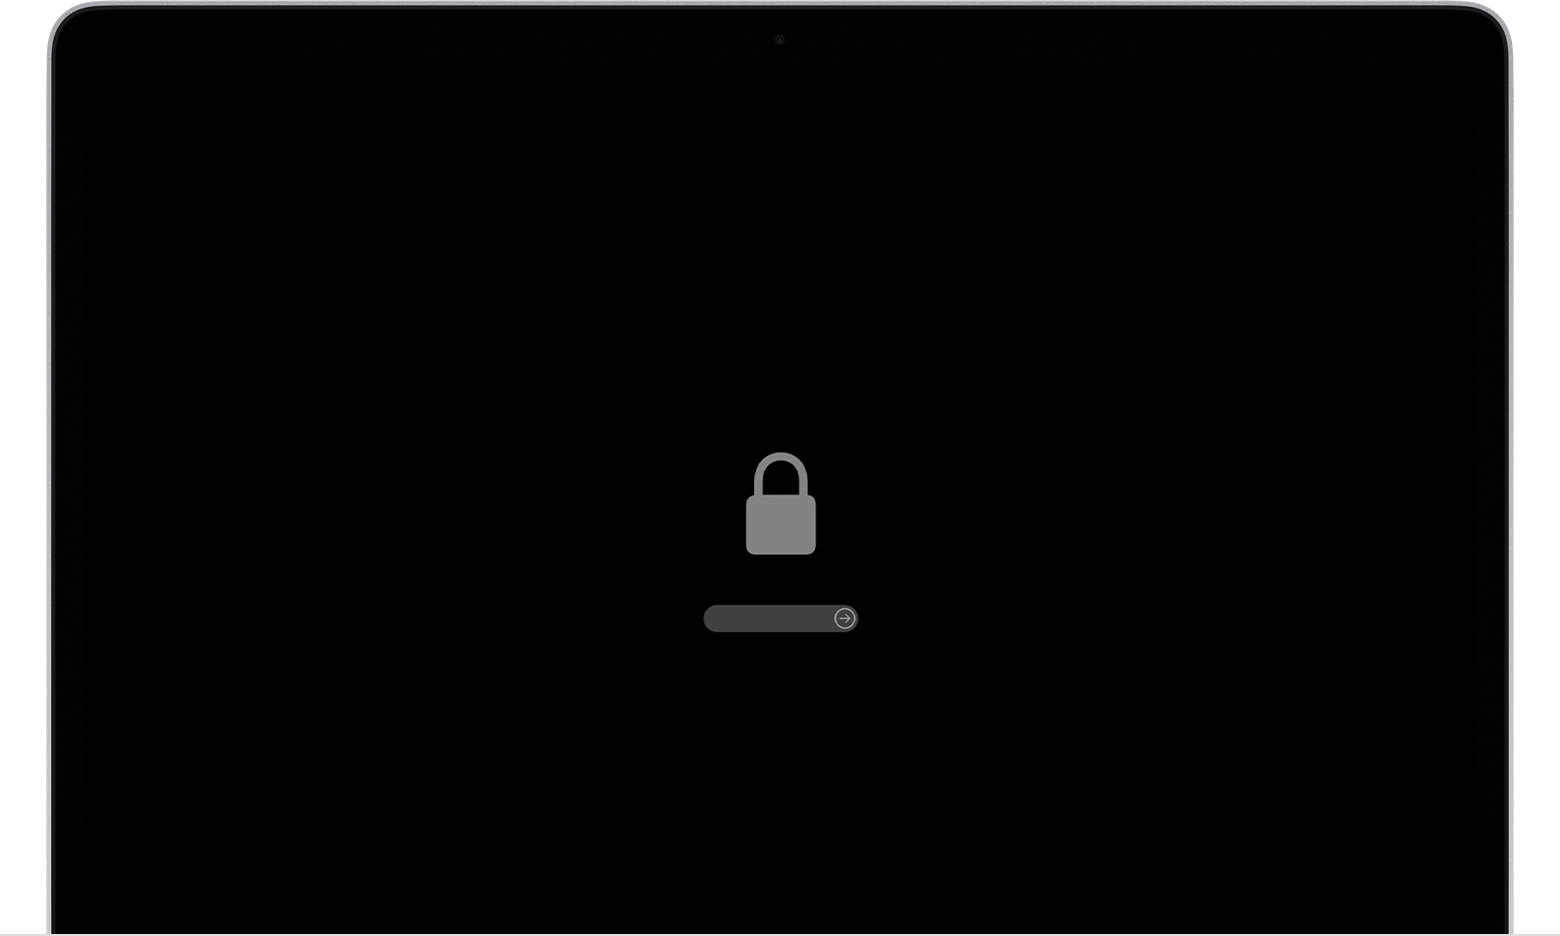 macOS 启动屏幕上显示了固件锁形图标和密码输入栏